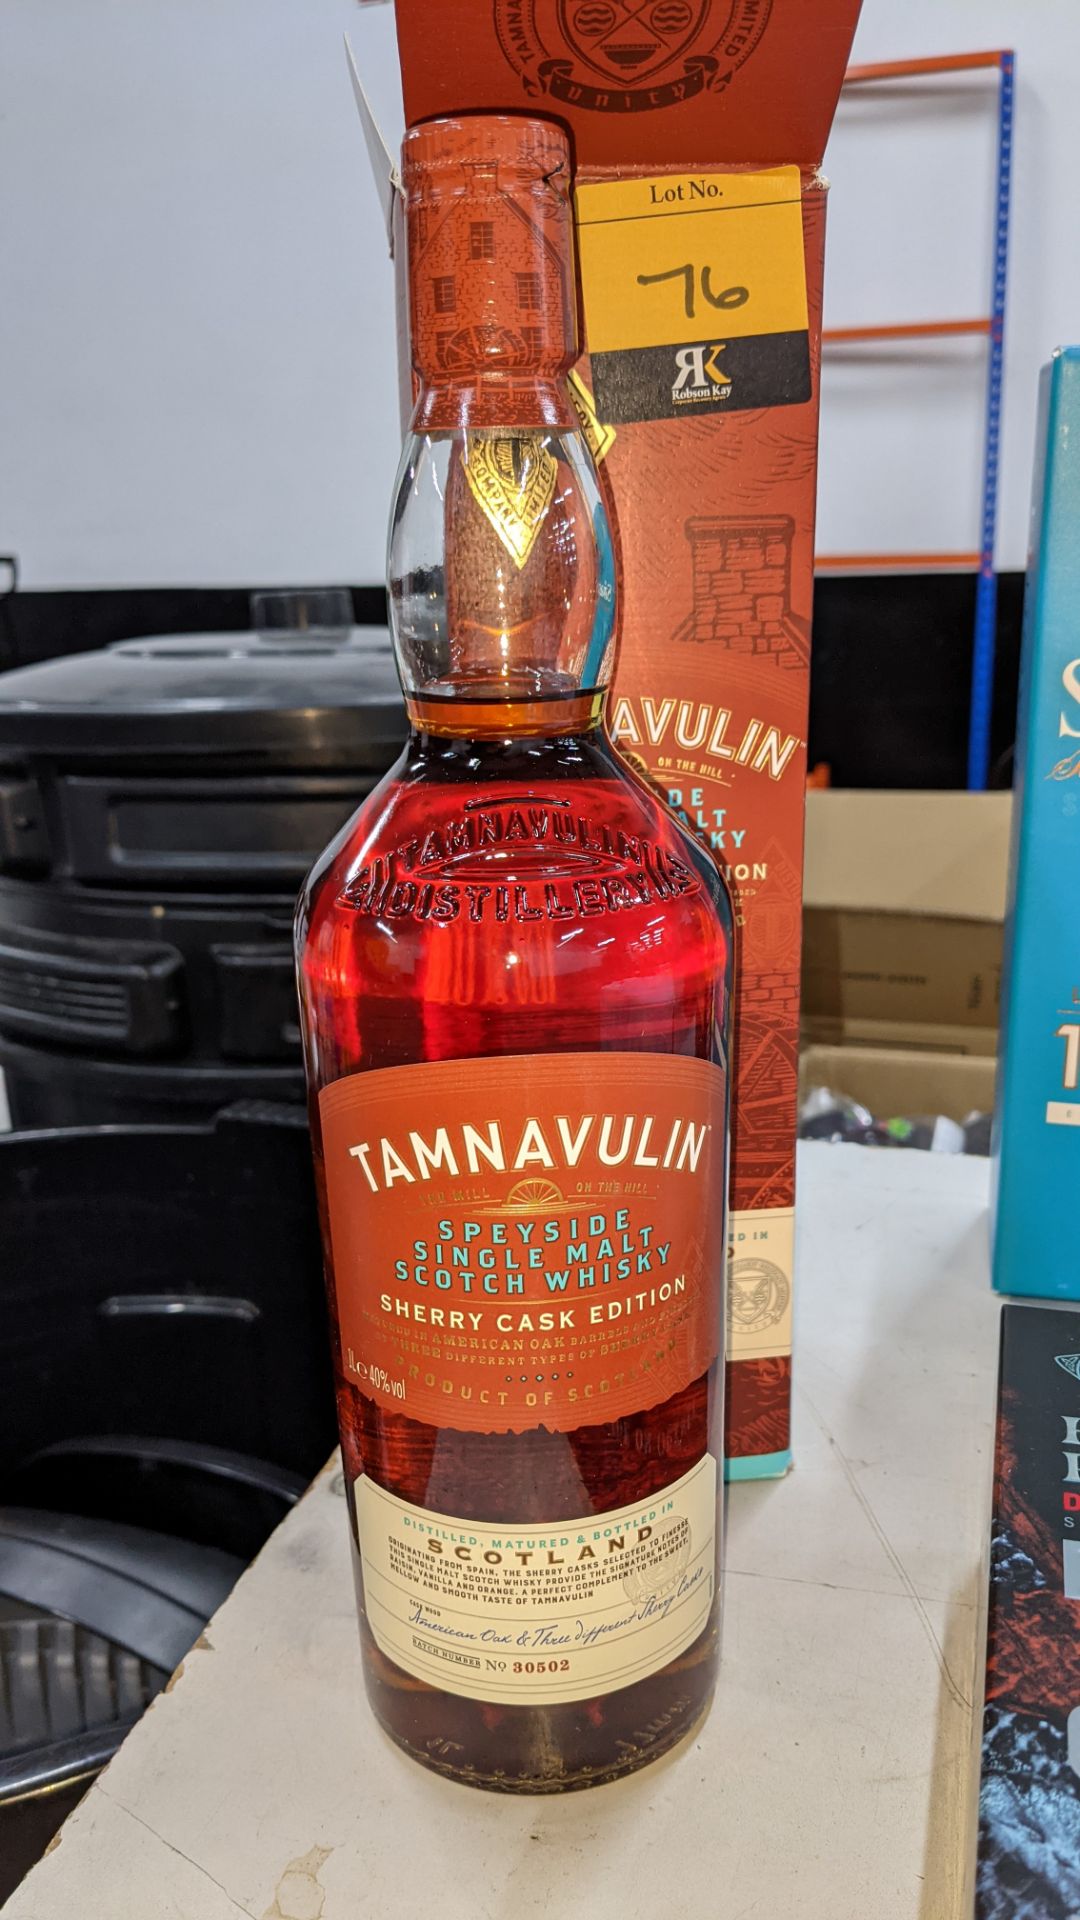 Tamnavulin Speyside Single Malt Sherry Cask Edition whisky - 1 off 1ltr bottle in gift box. - Image 2 of 5